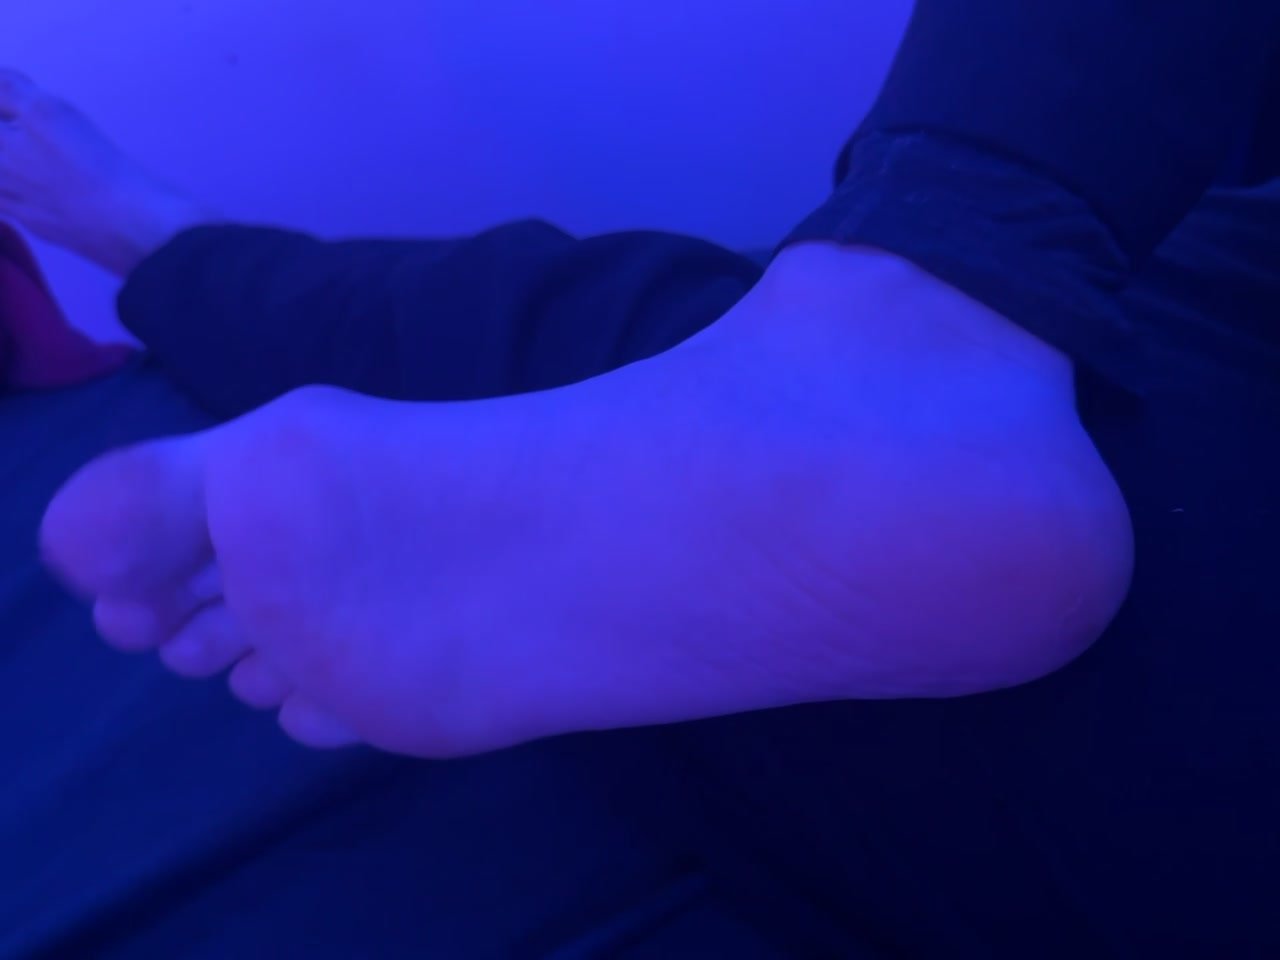 My feet - video 25